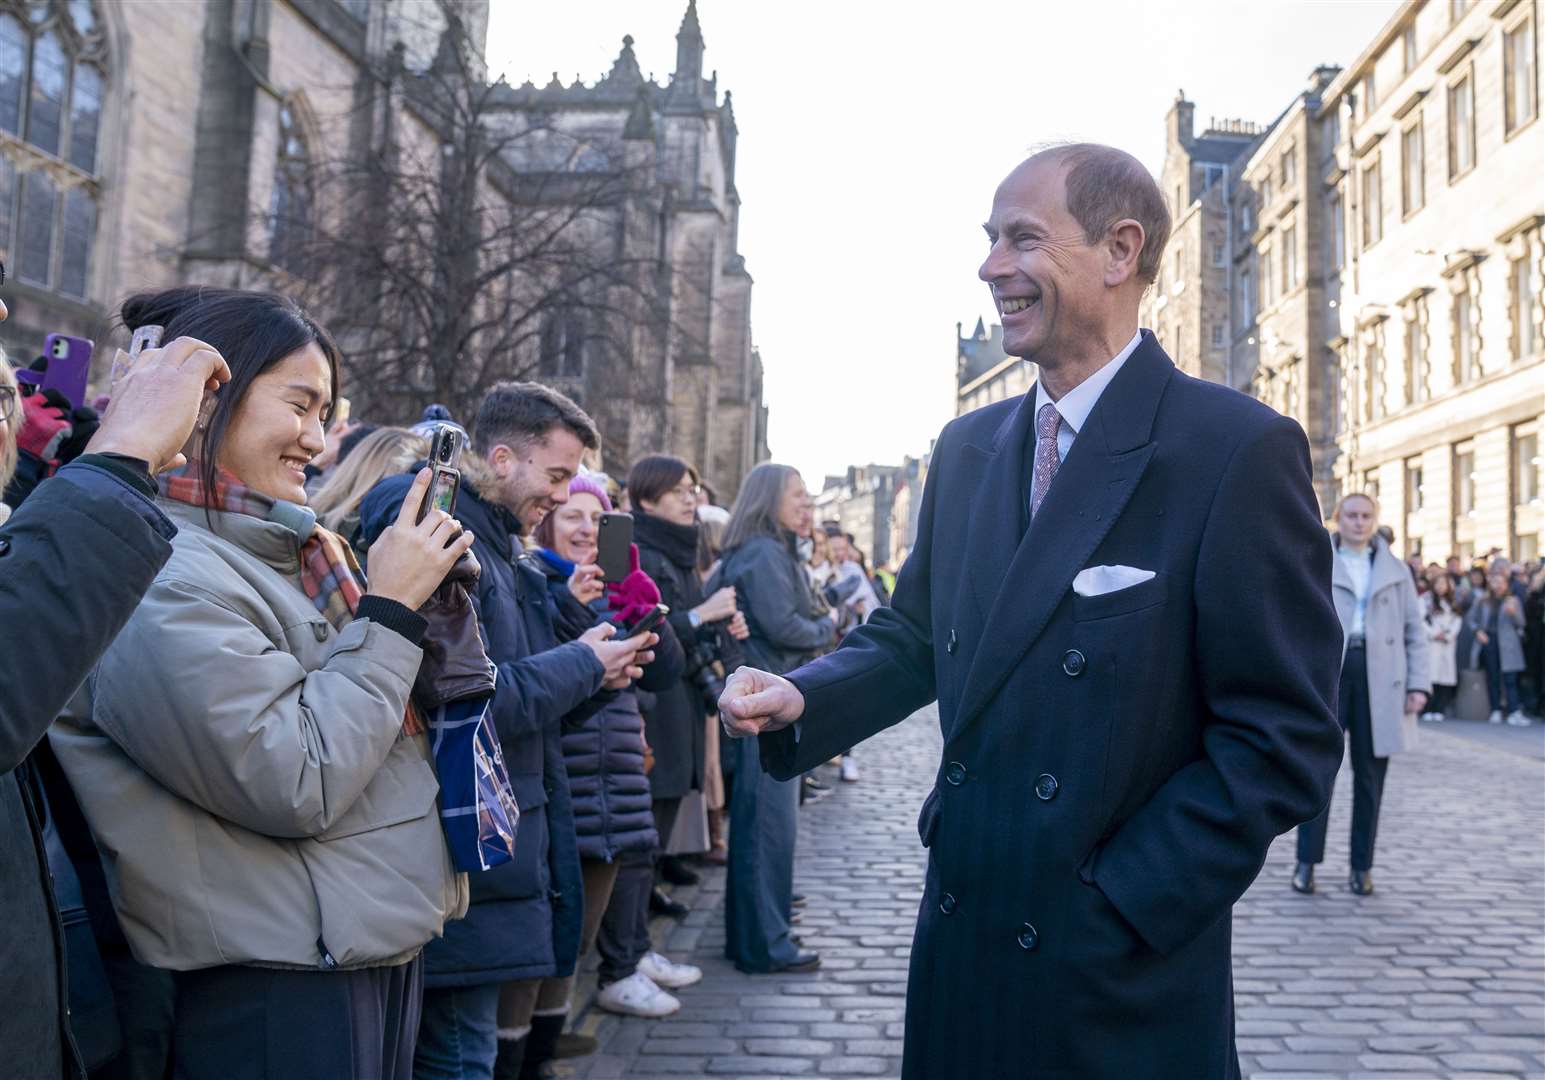 The new Duke of Edinburgh meets members of the public outside the City Chambers in Edinburgh (Jane Barlow/PA)